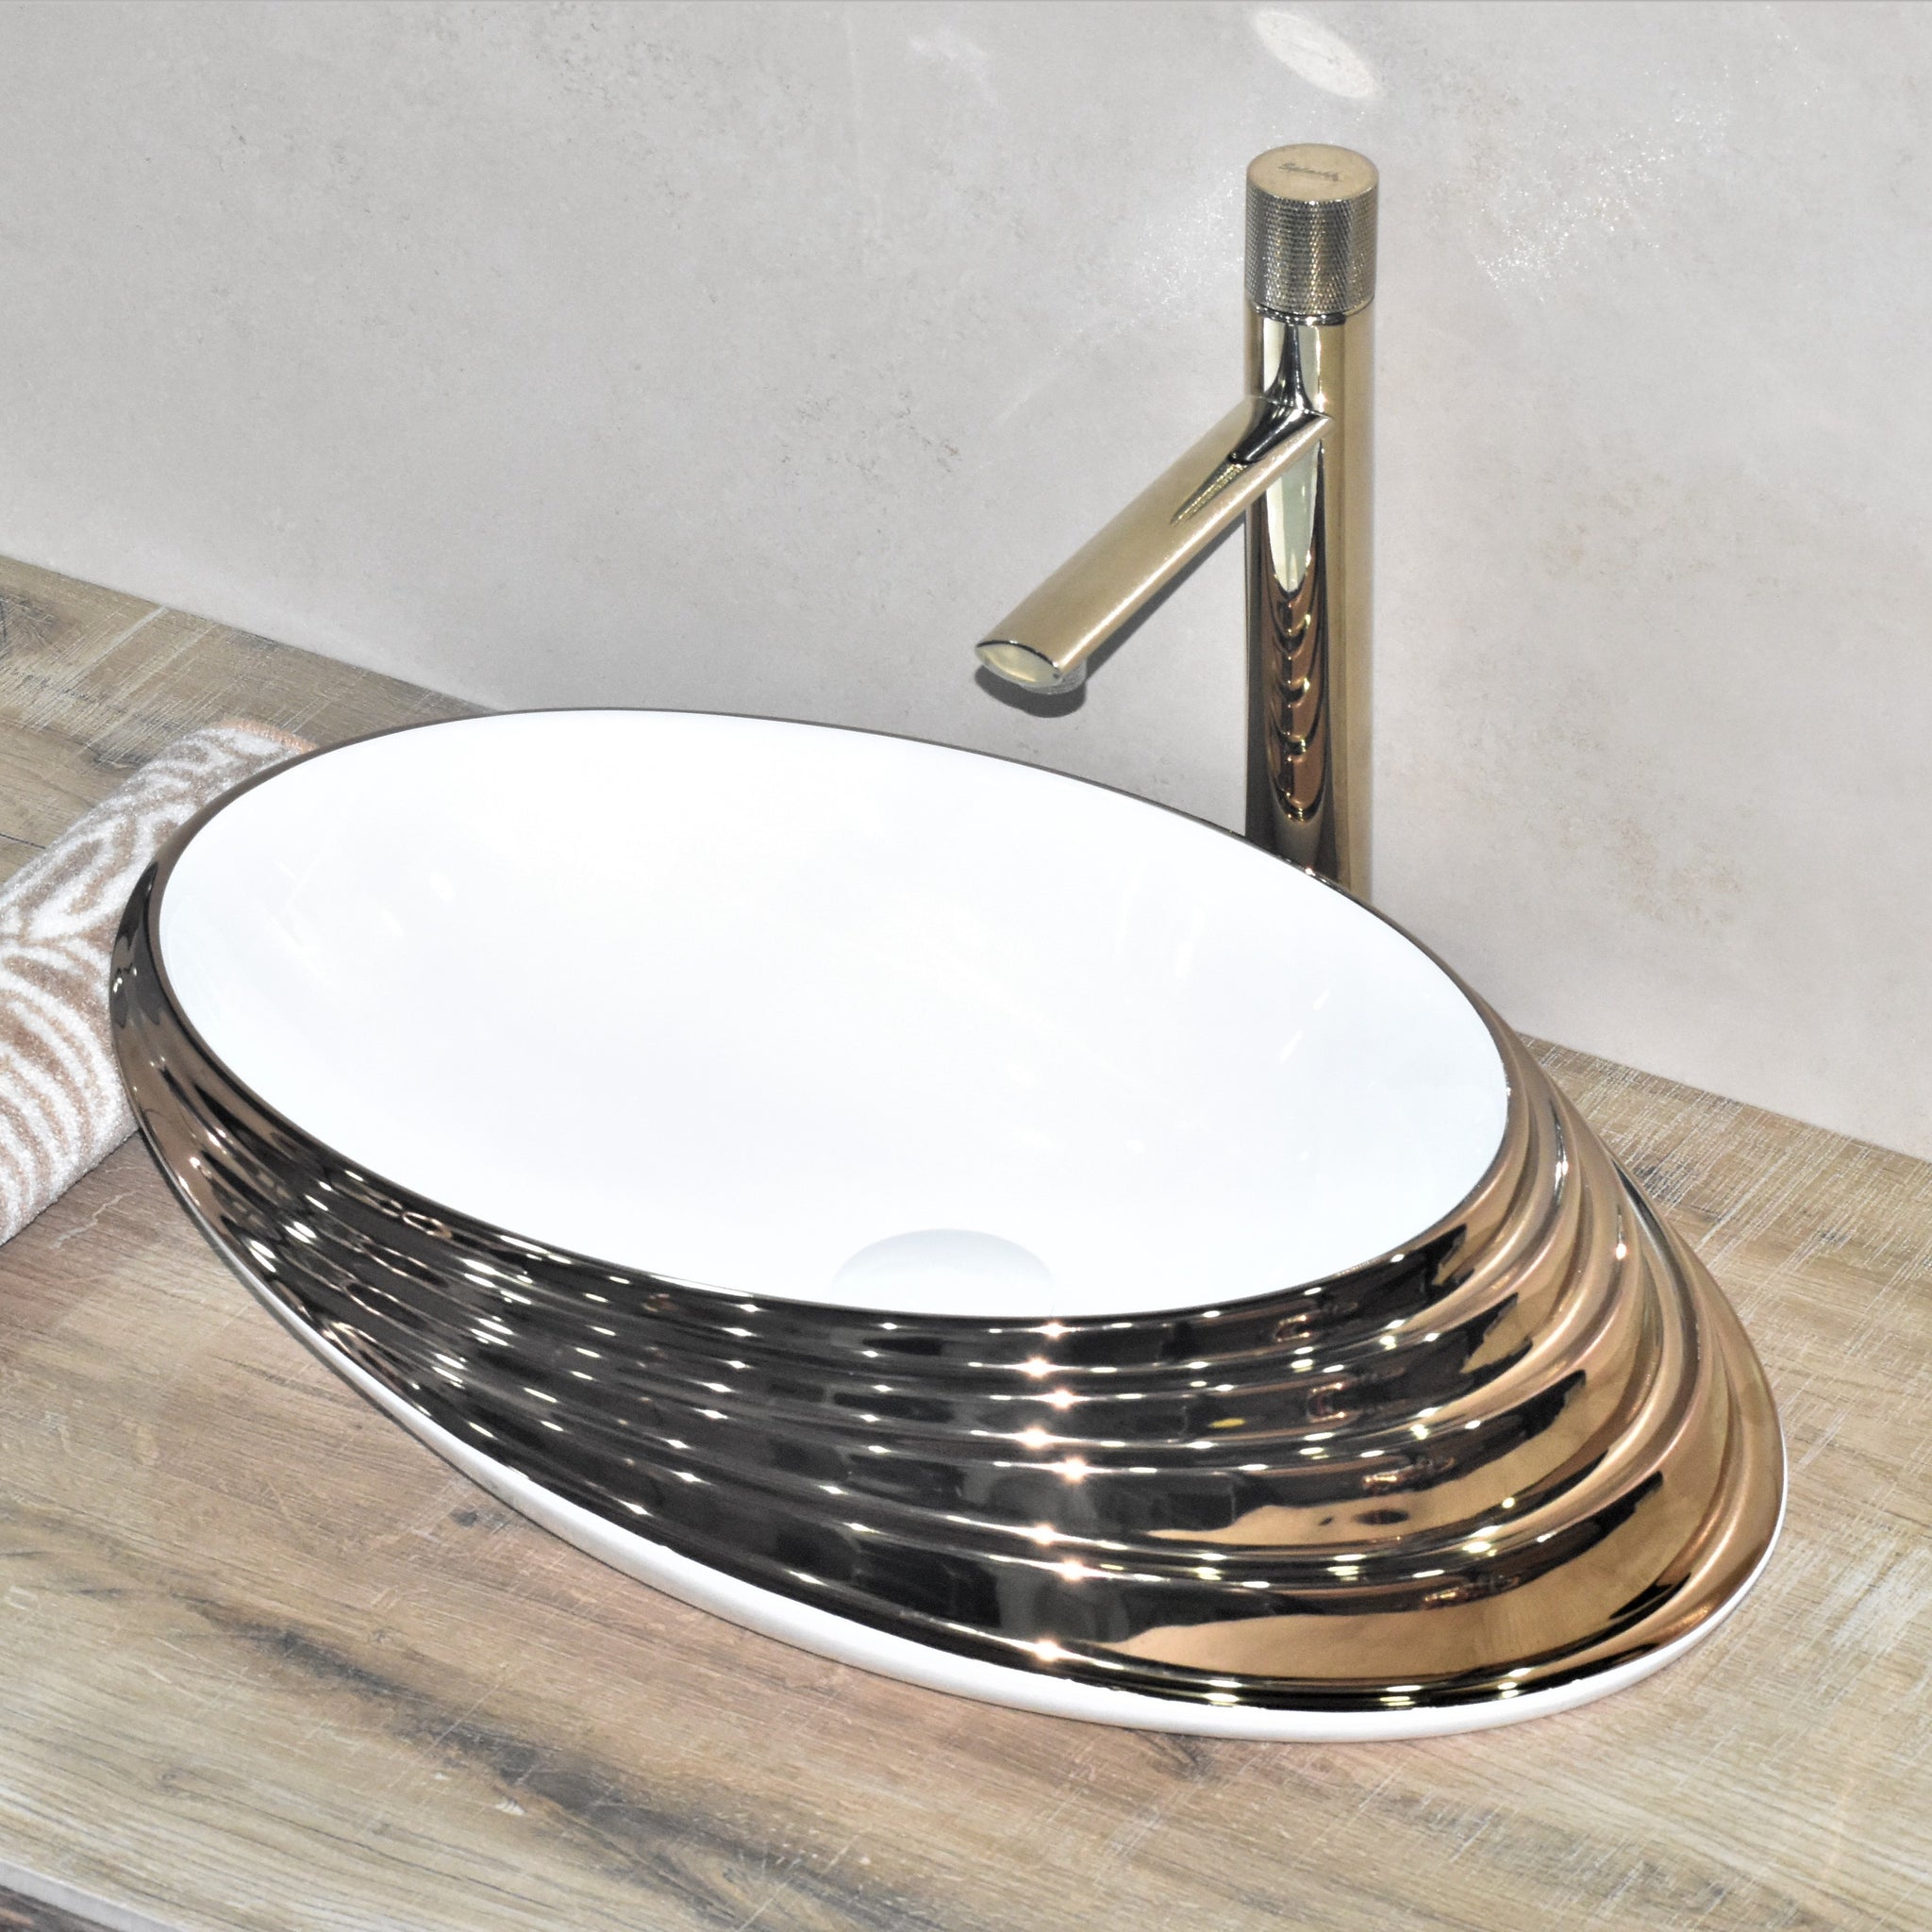 B Backline Ceramic Table Top, Counter Top Wash Basin Gold 52 x 38 CM